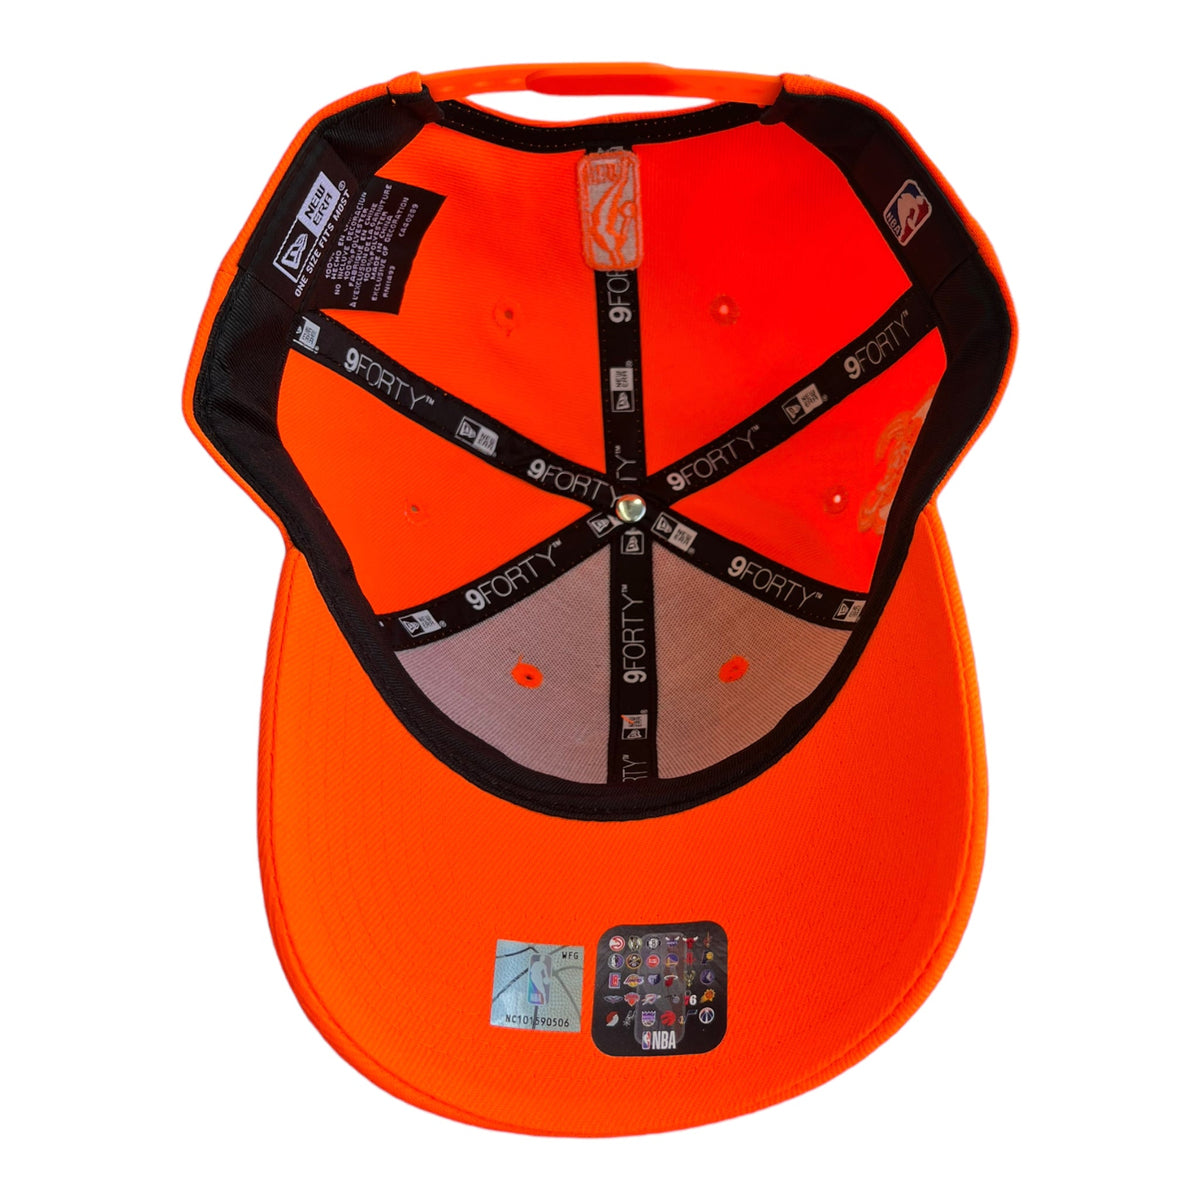 New Era Milwaukee Bucks Custom Monochrome 9Forty Stretch Snapback Baseball Cap - Neon Orange